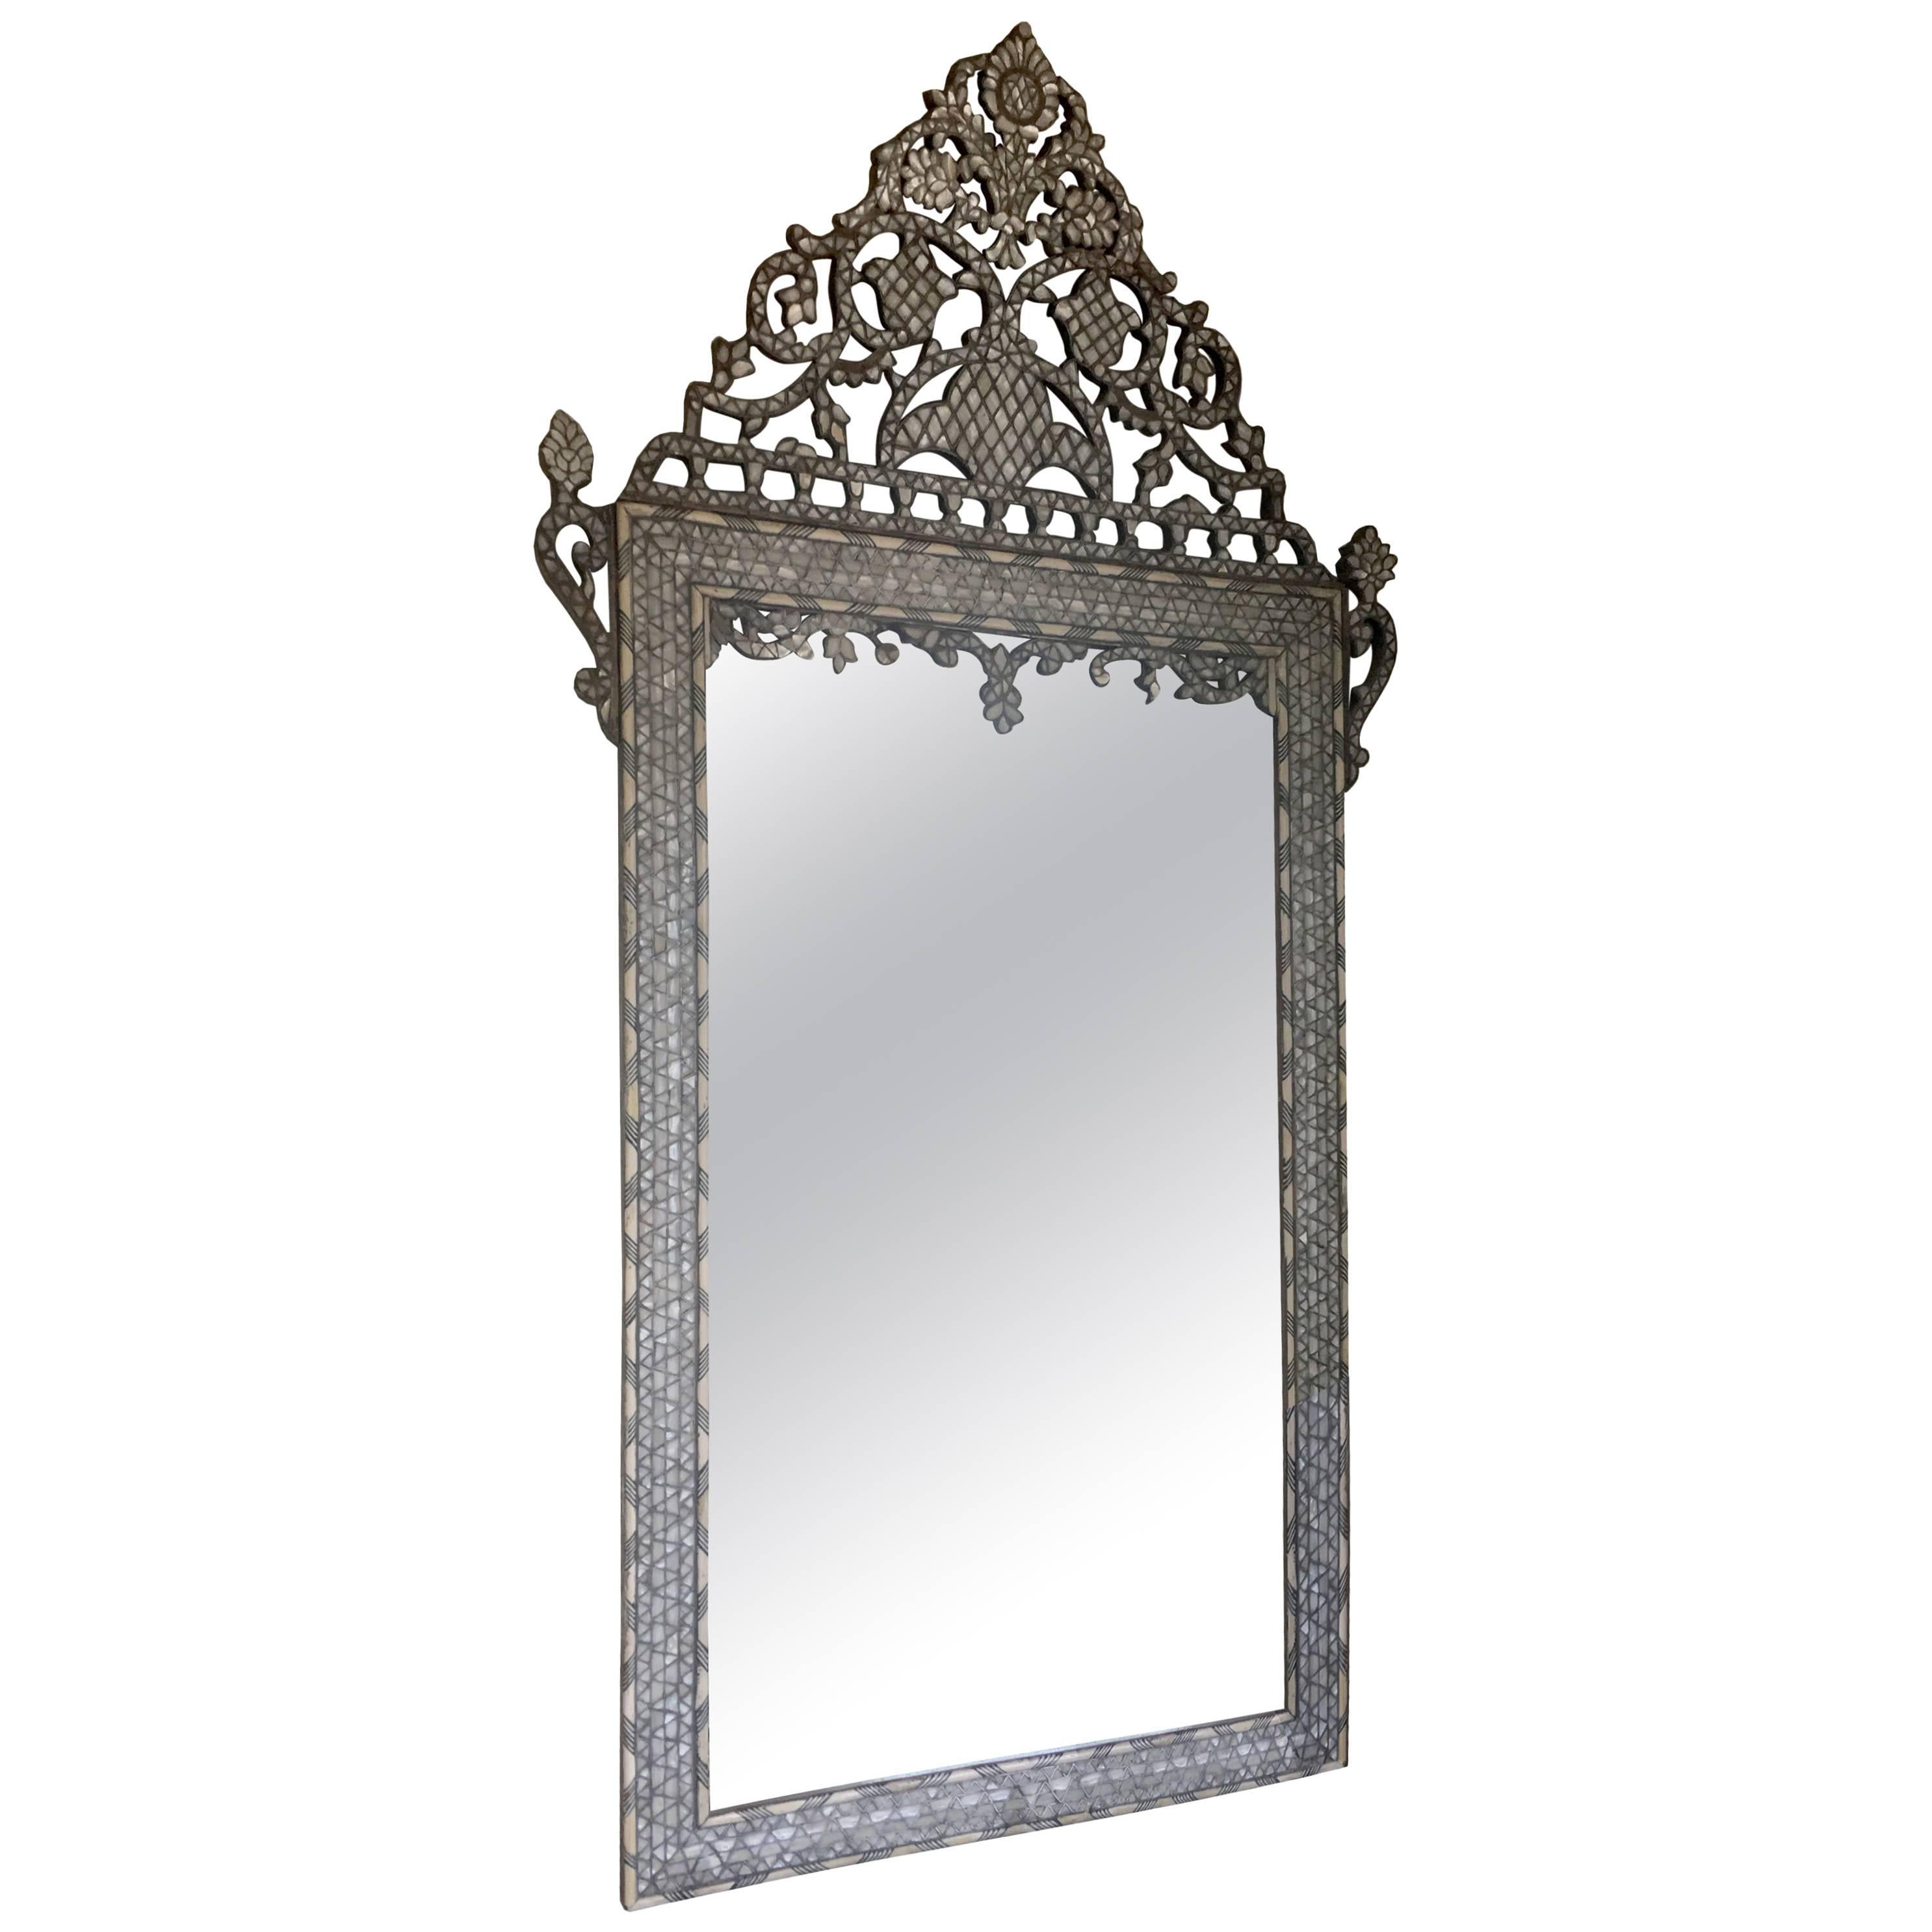 Late 19th Century Moroccan Bone Inlaid Mirror